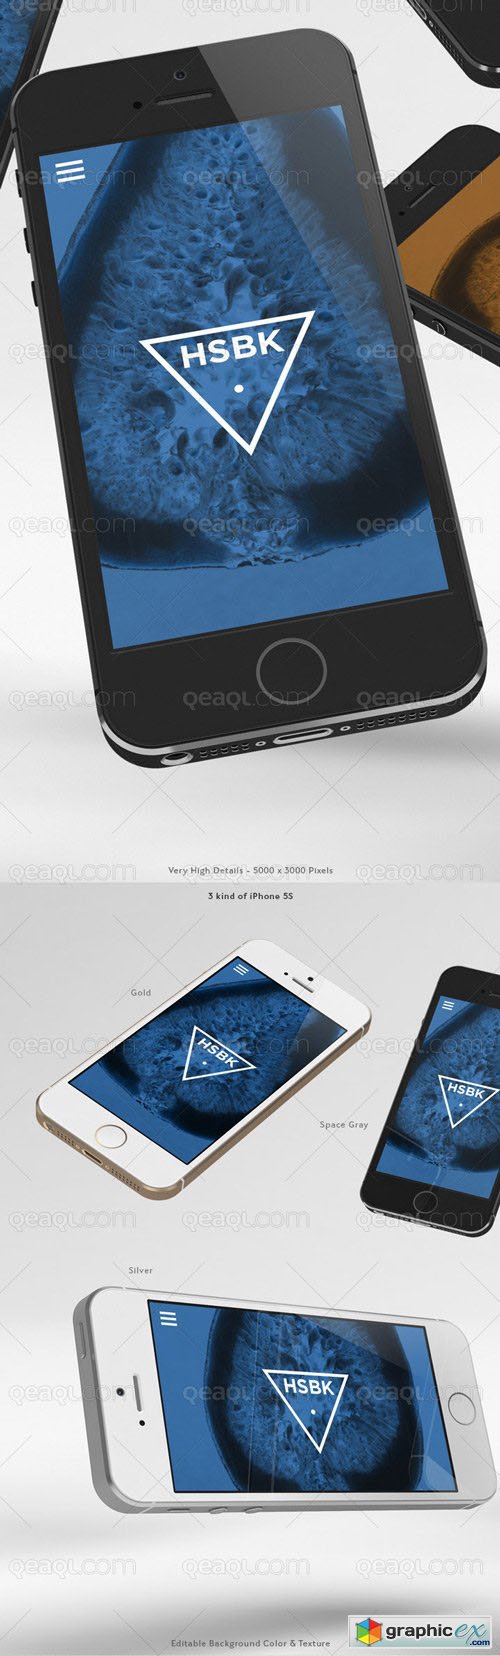 iPhone 5S Mockup - Multi-purpose 